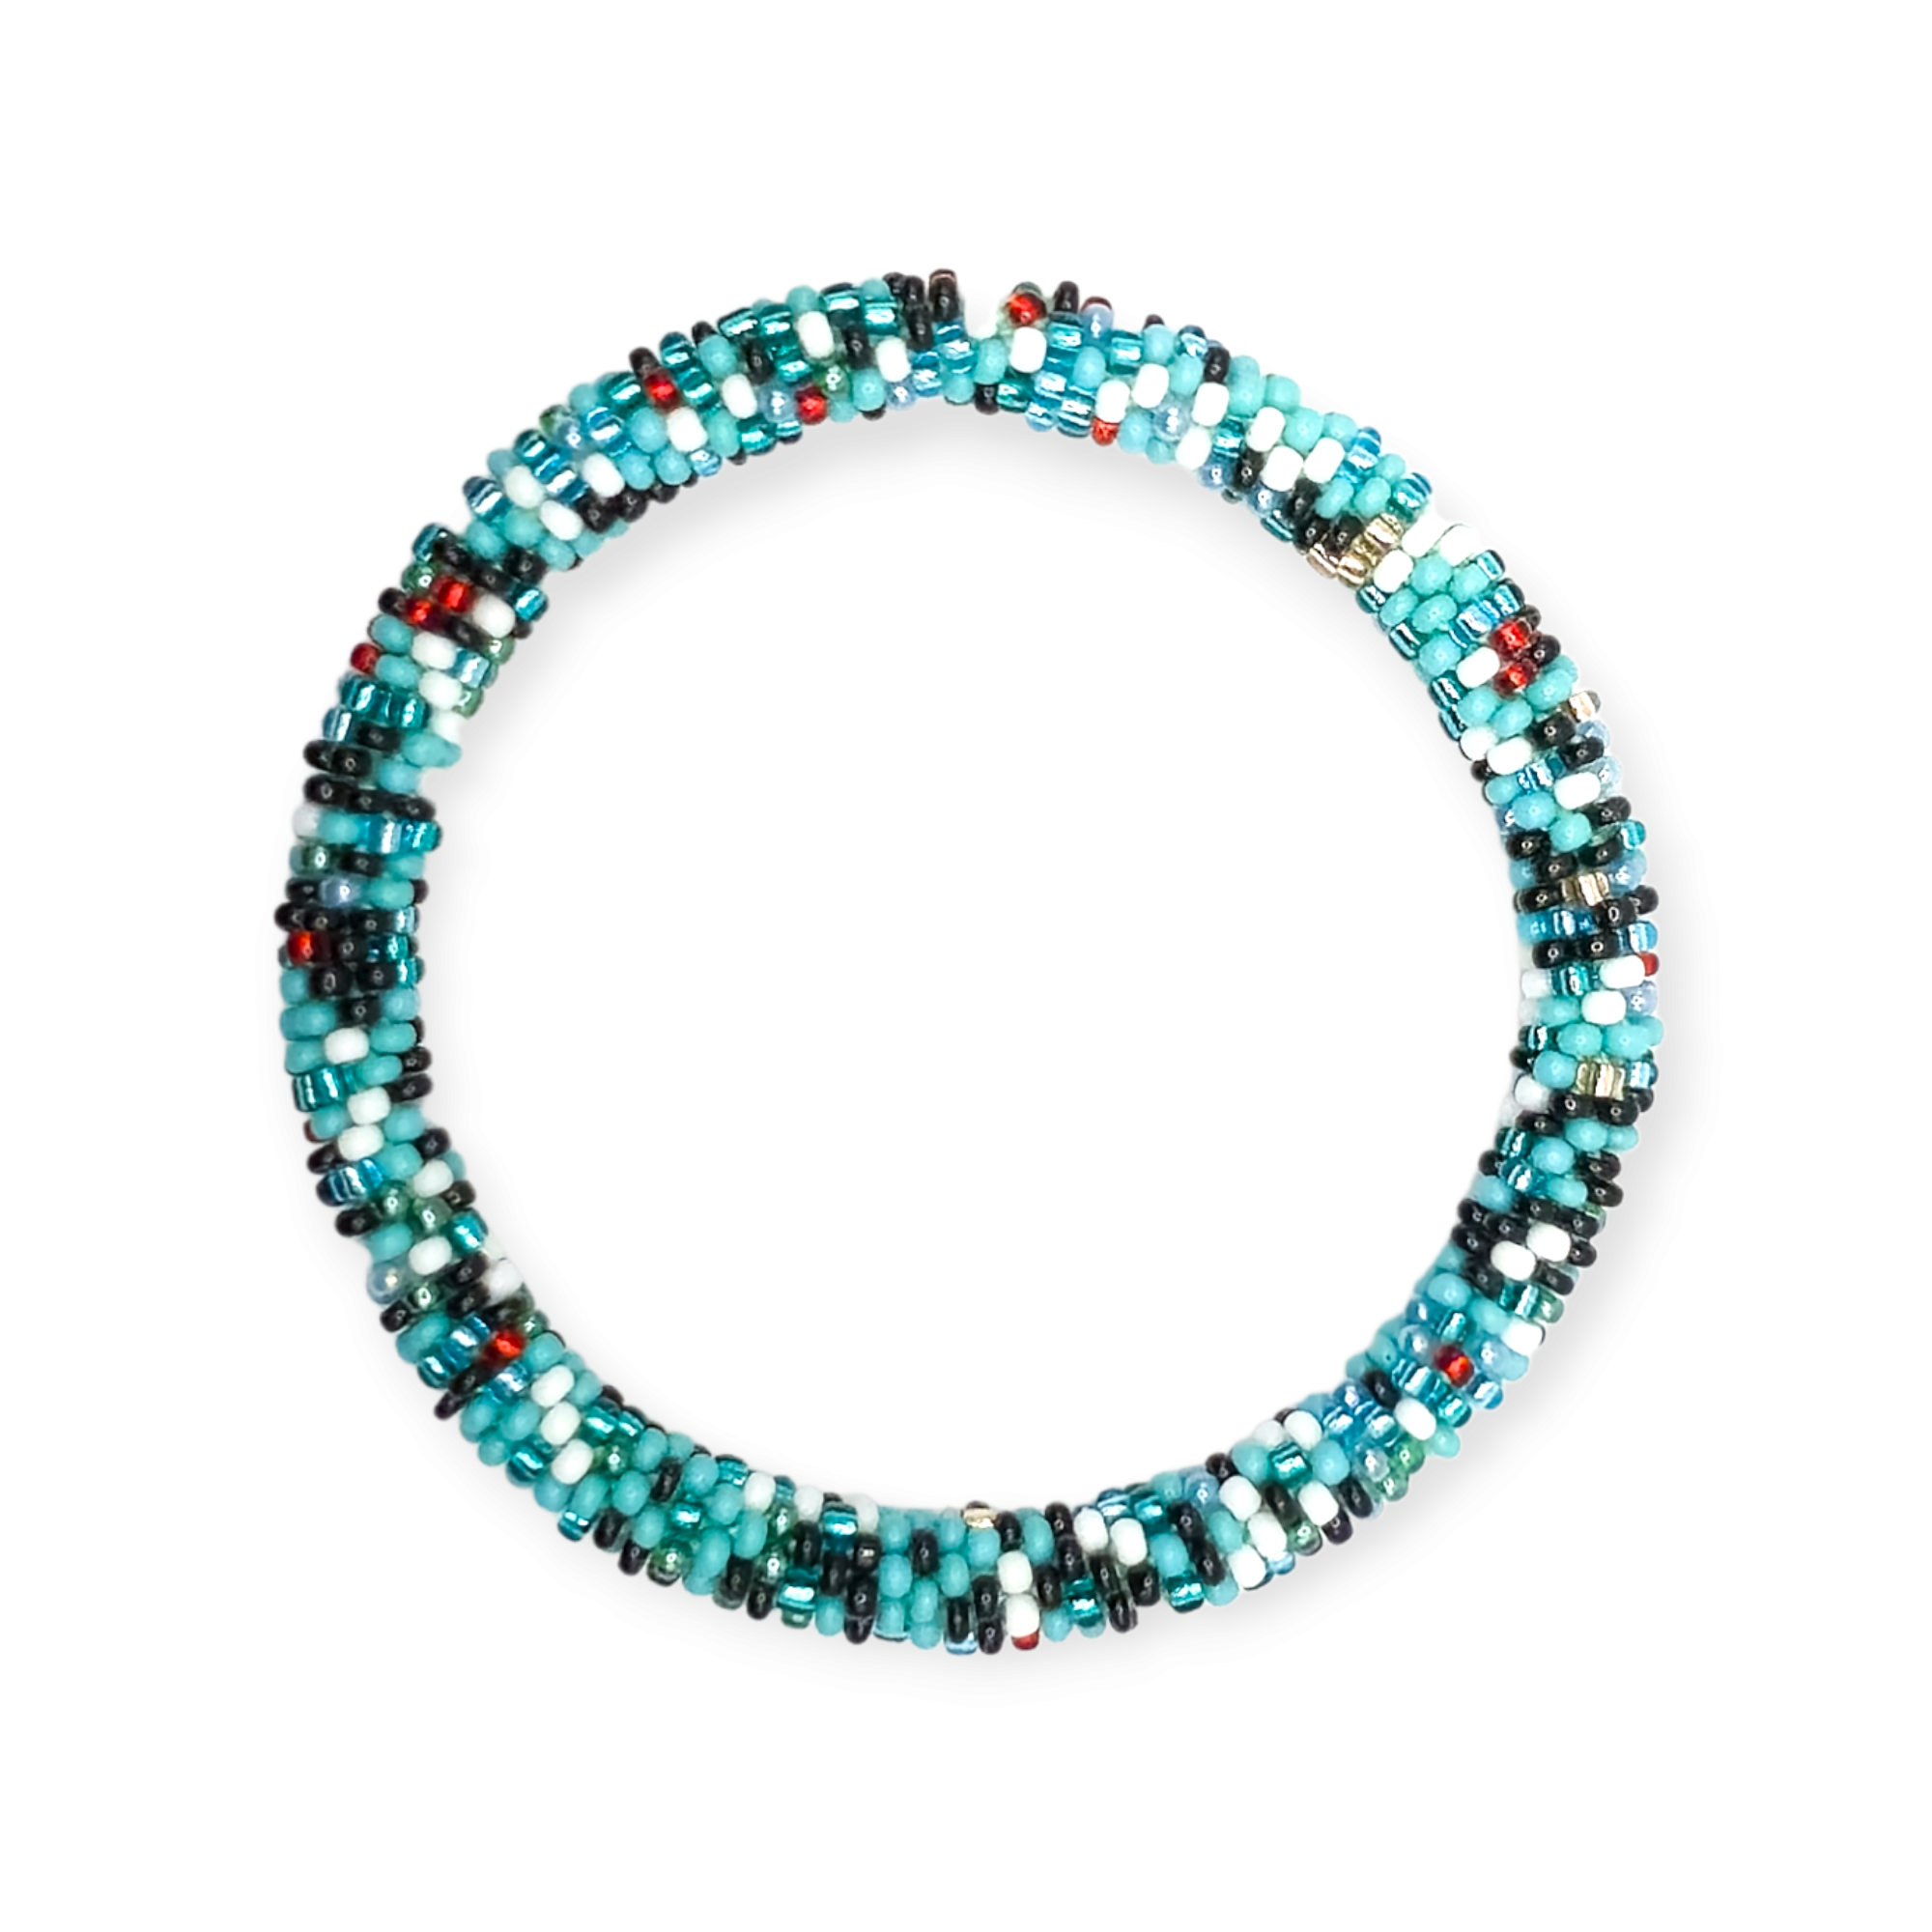 The Turquoise Confetti Bracelet